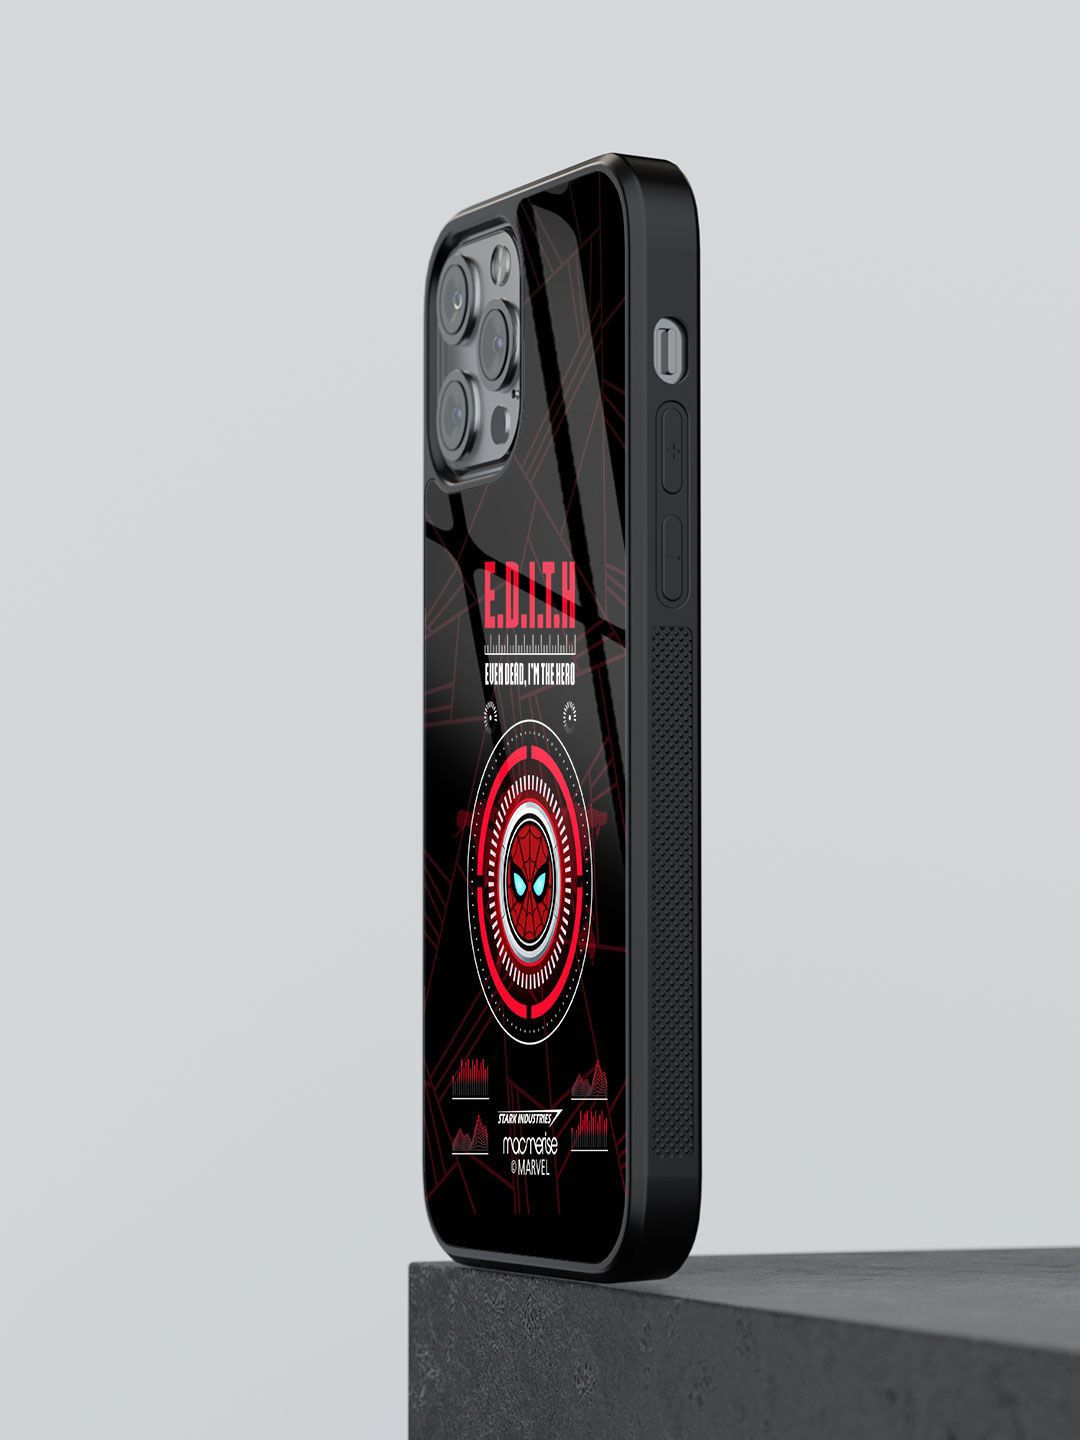 macmerise Black & Red Spiderman Printed iPhone 12 Pro Max Phone Case Price in India